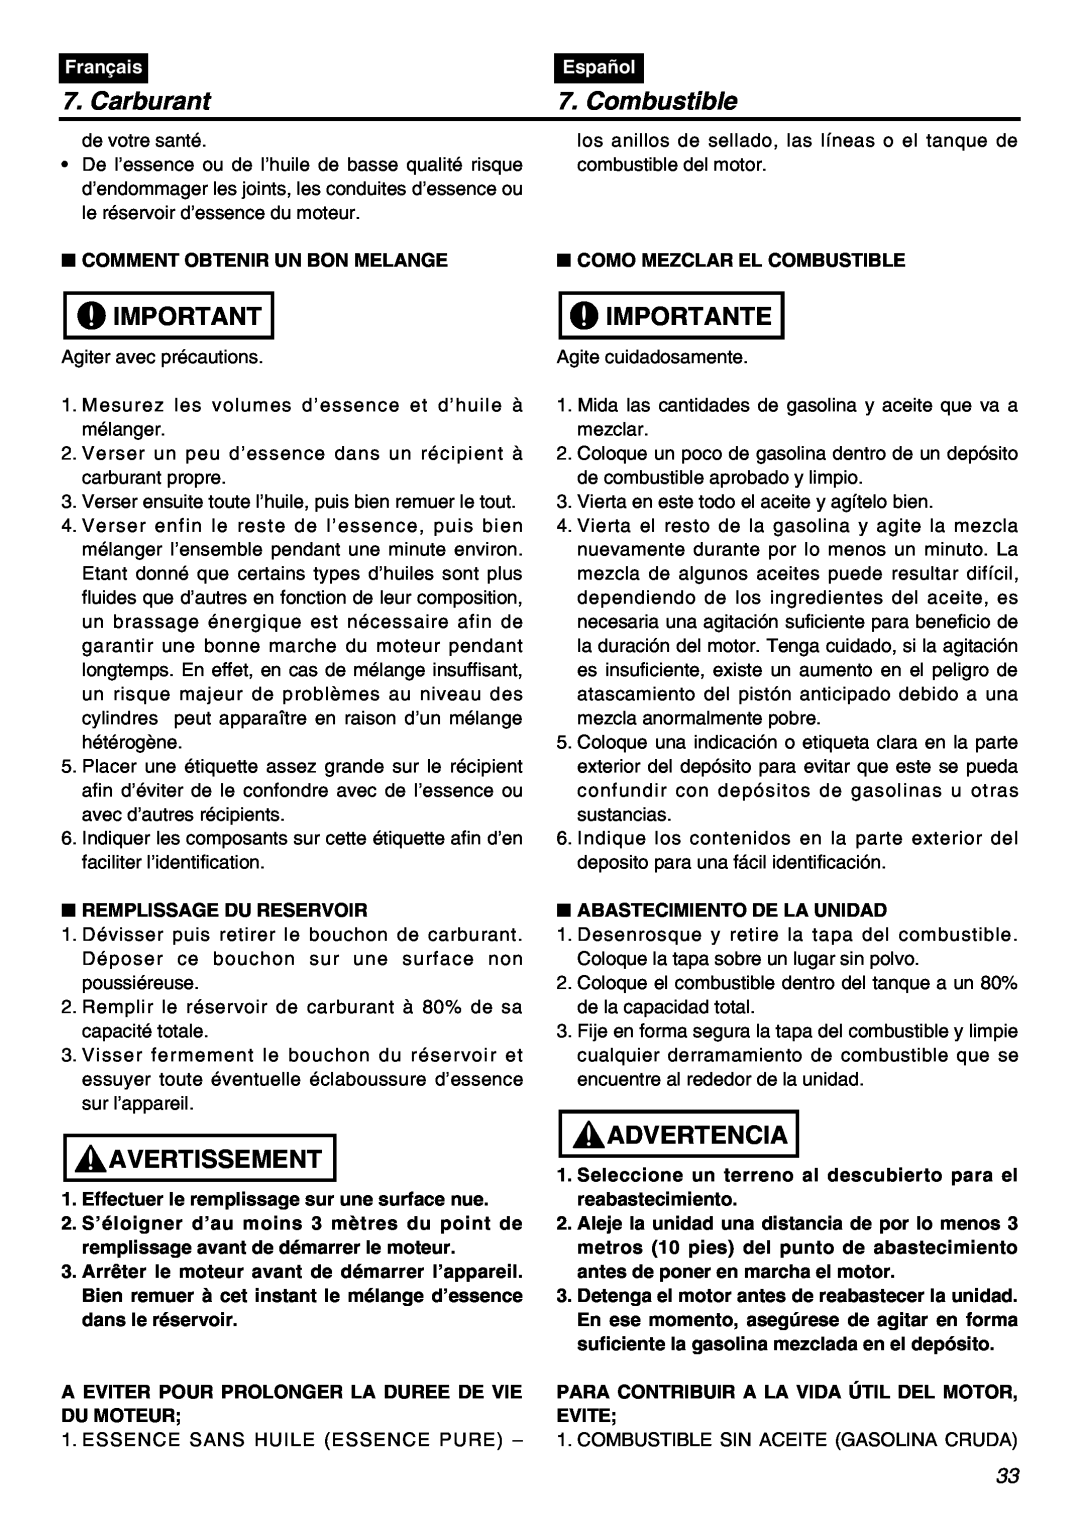 Zenoah EXZ2401S manual Carburant, Combustible, Importante, Avertissement, Advertencia, Français, Español 